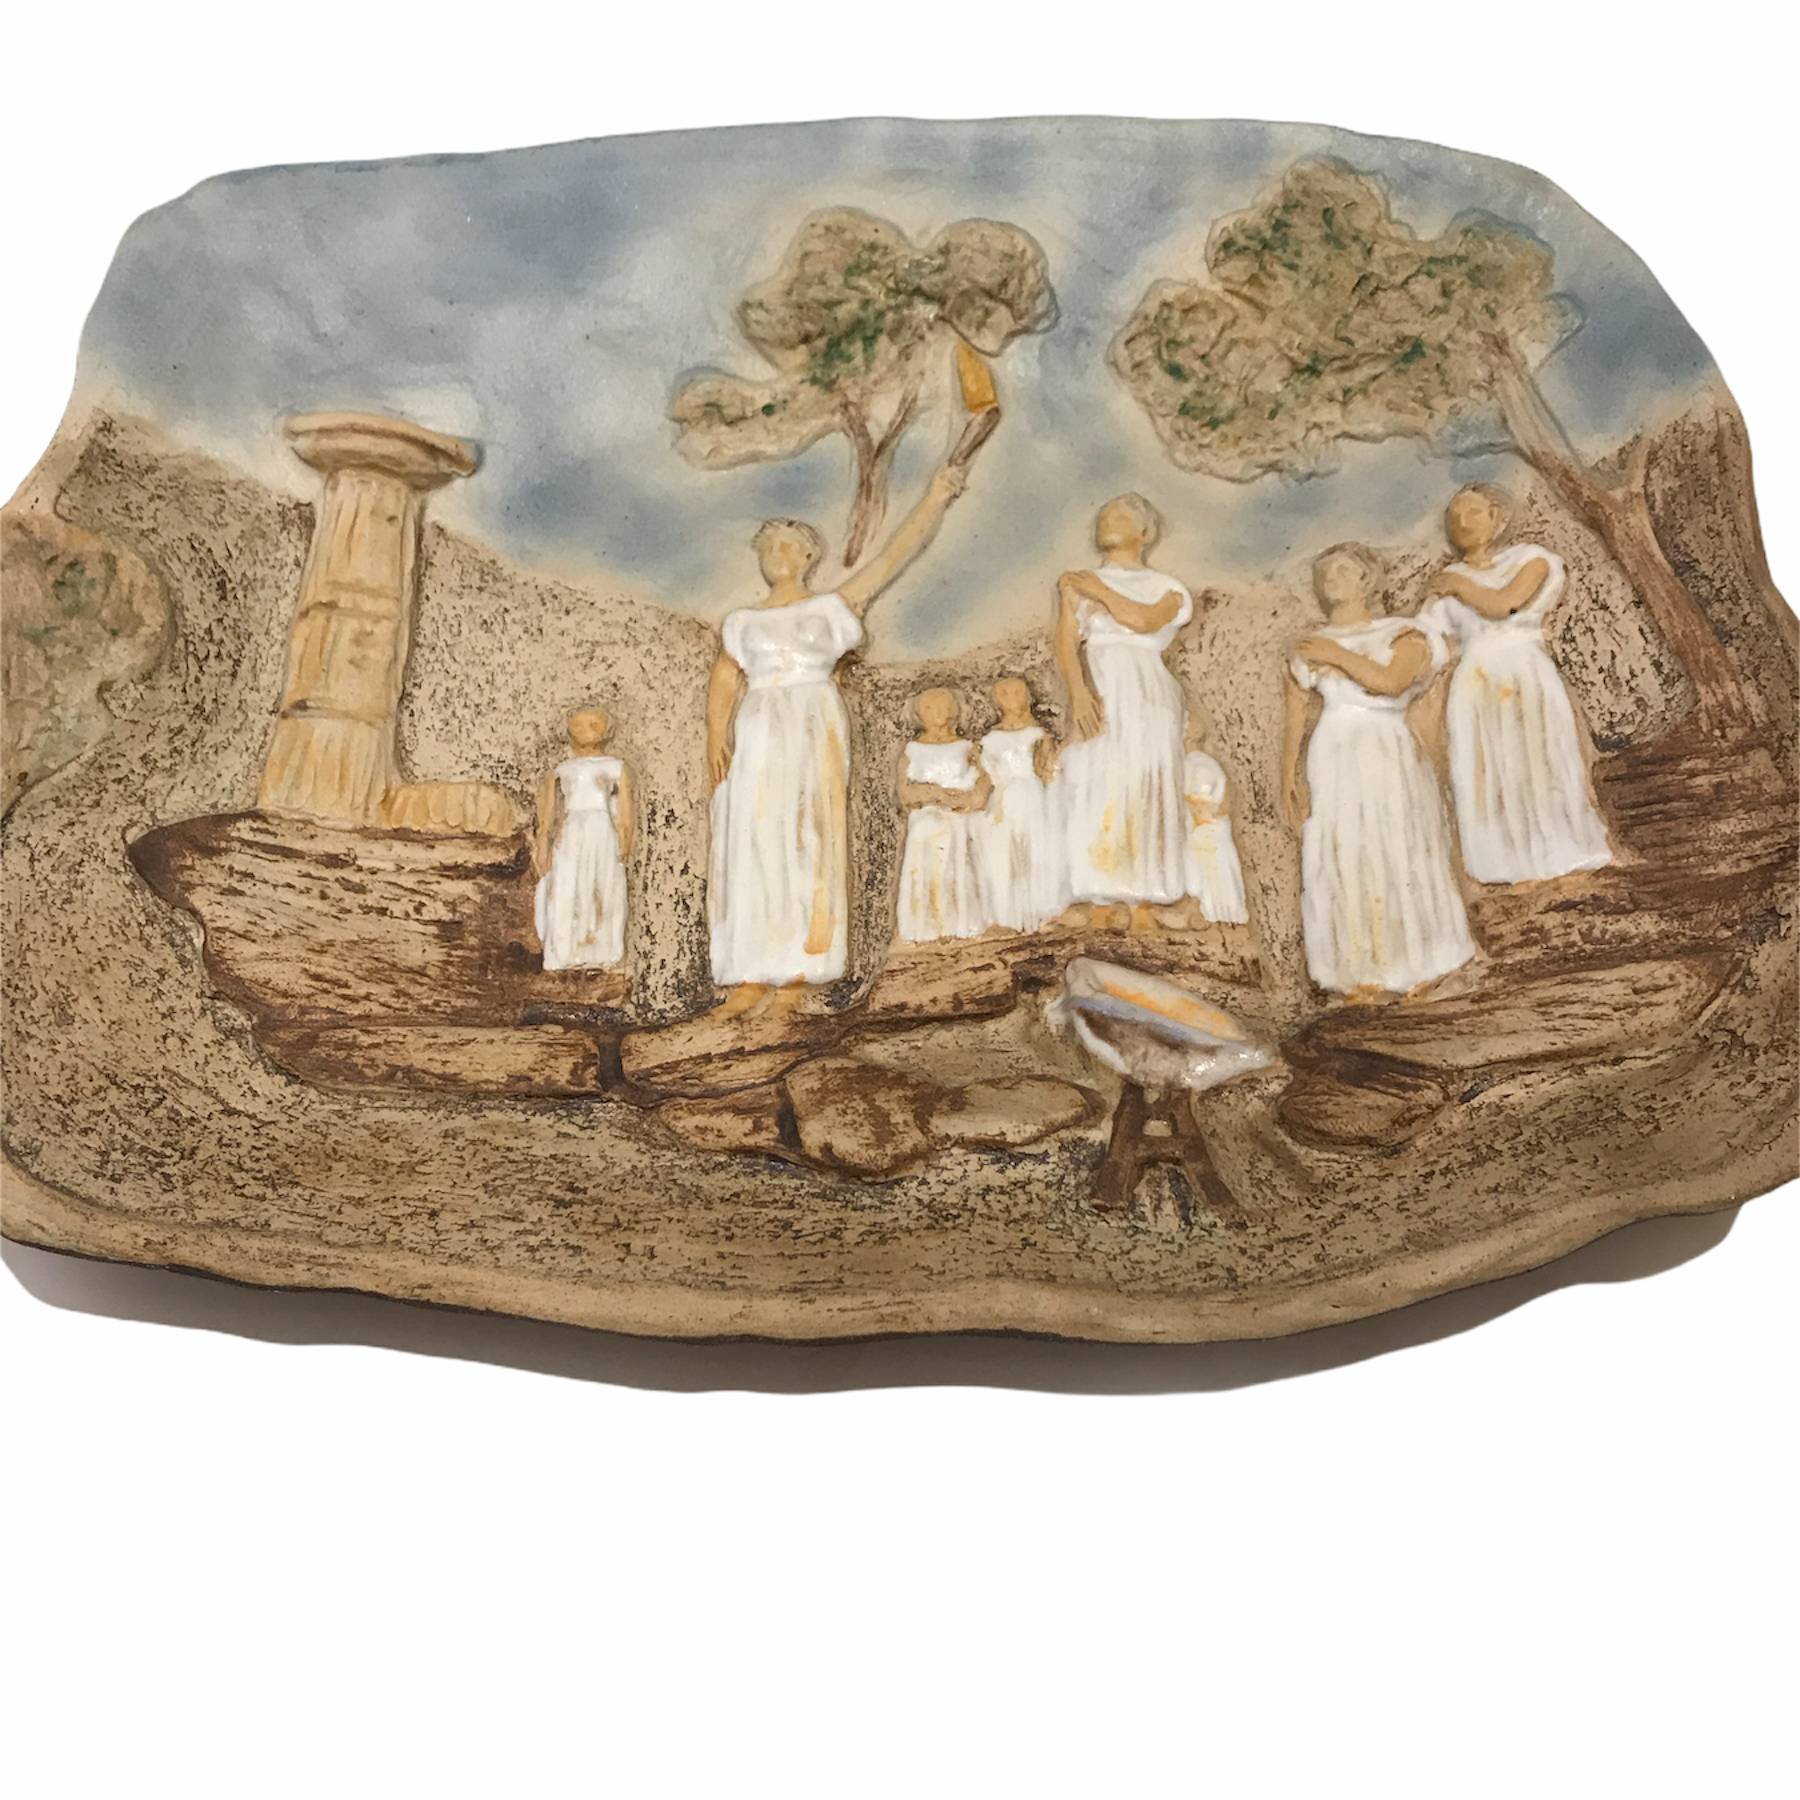 Ceramic plate made in Thessaloniki